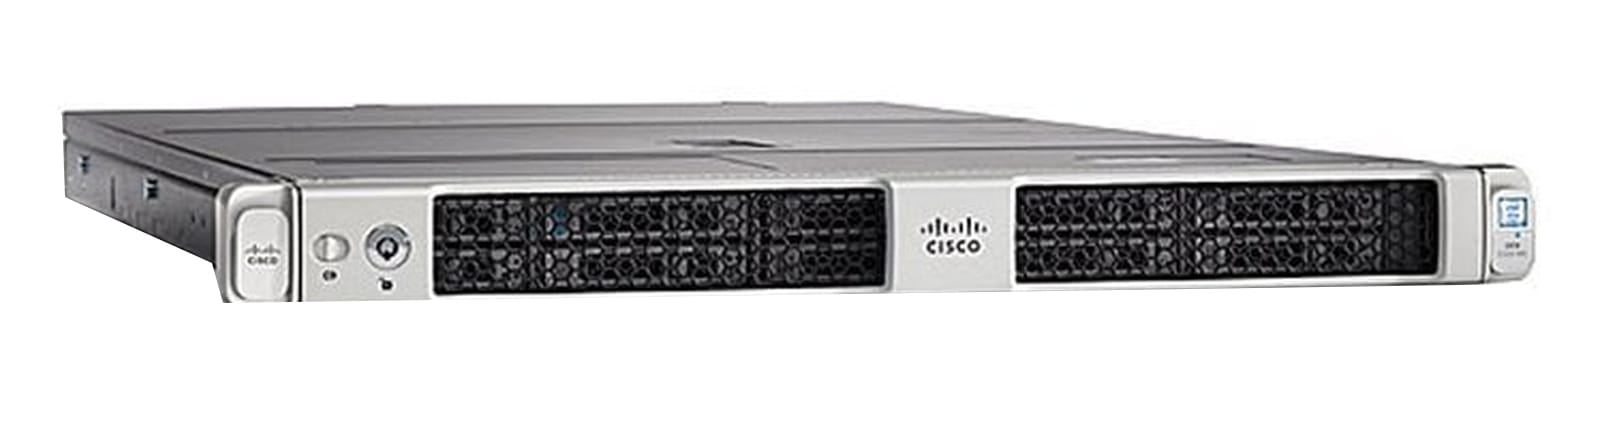 Cisco Meeting Server 2000 M6 - rack-mountable